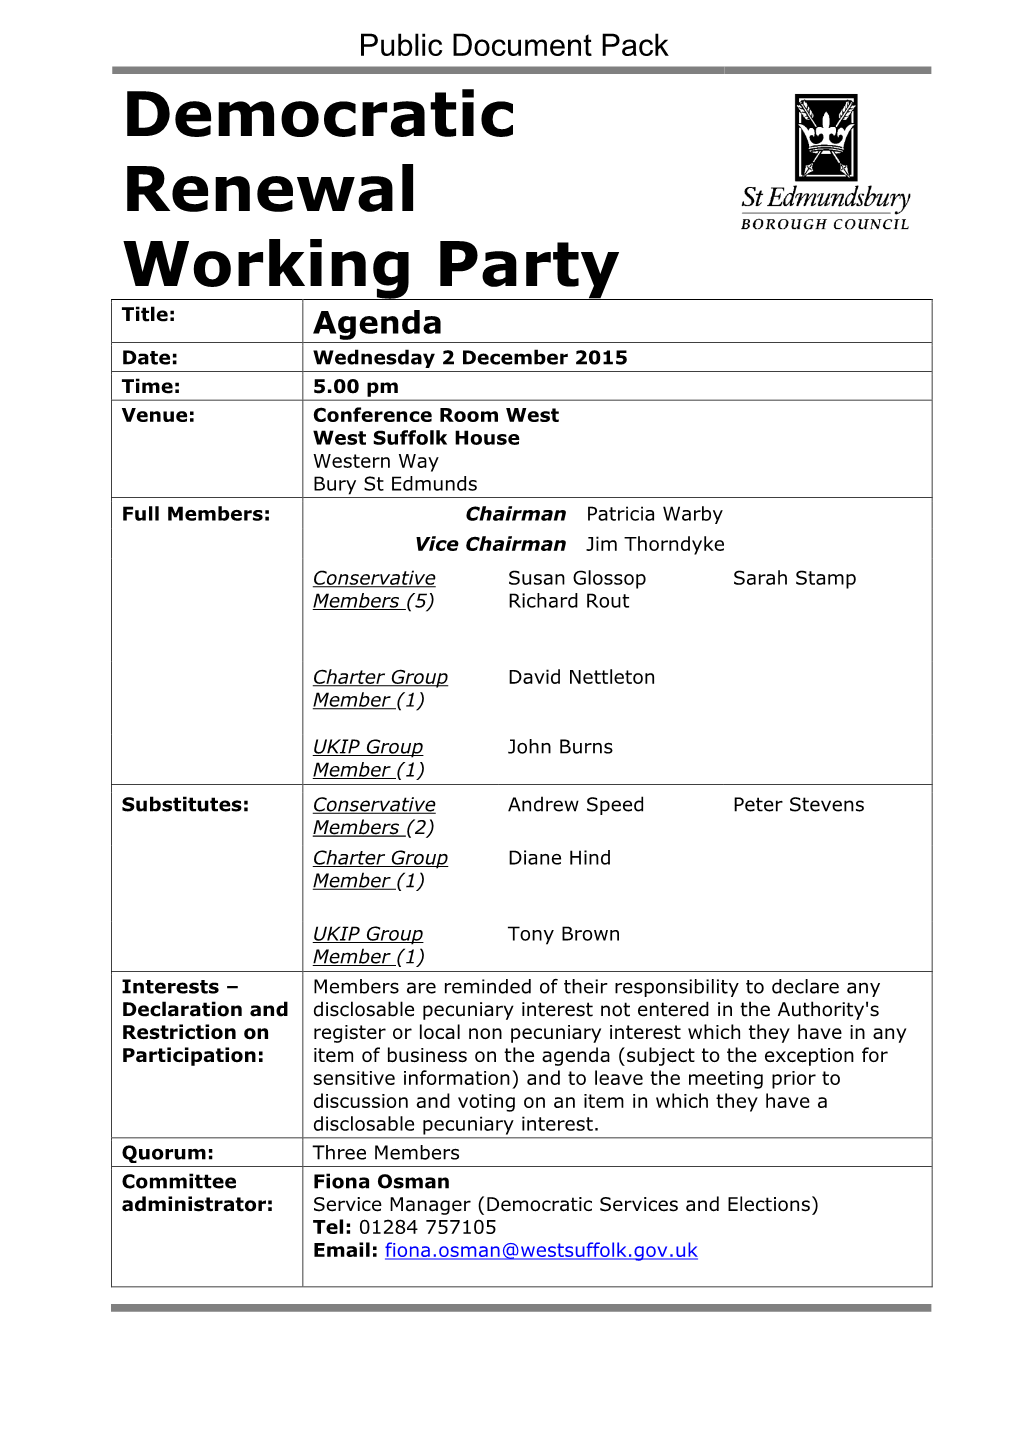 (Public Pack)Agenda Document for St Edmundsbury Democratic Renewal